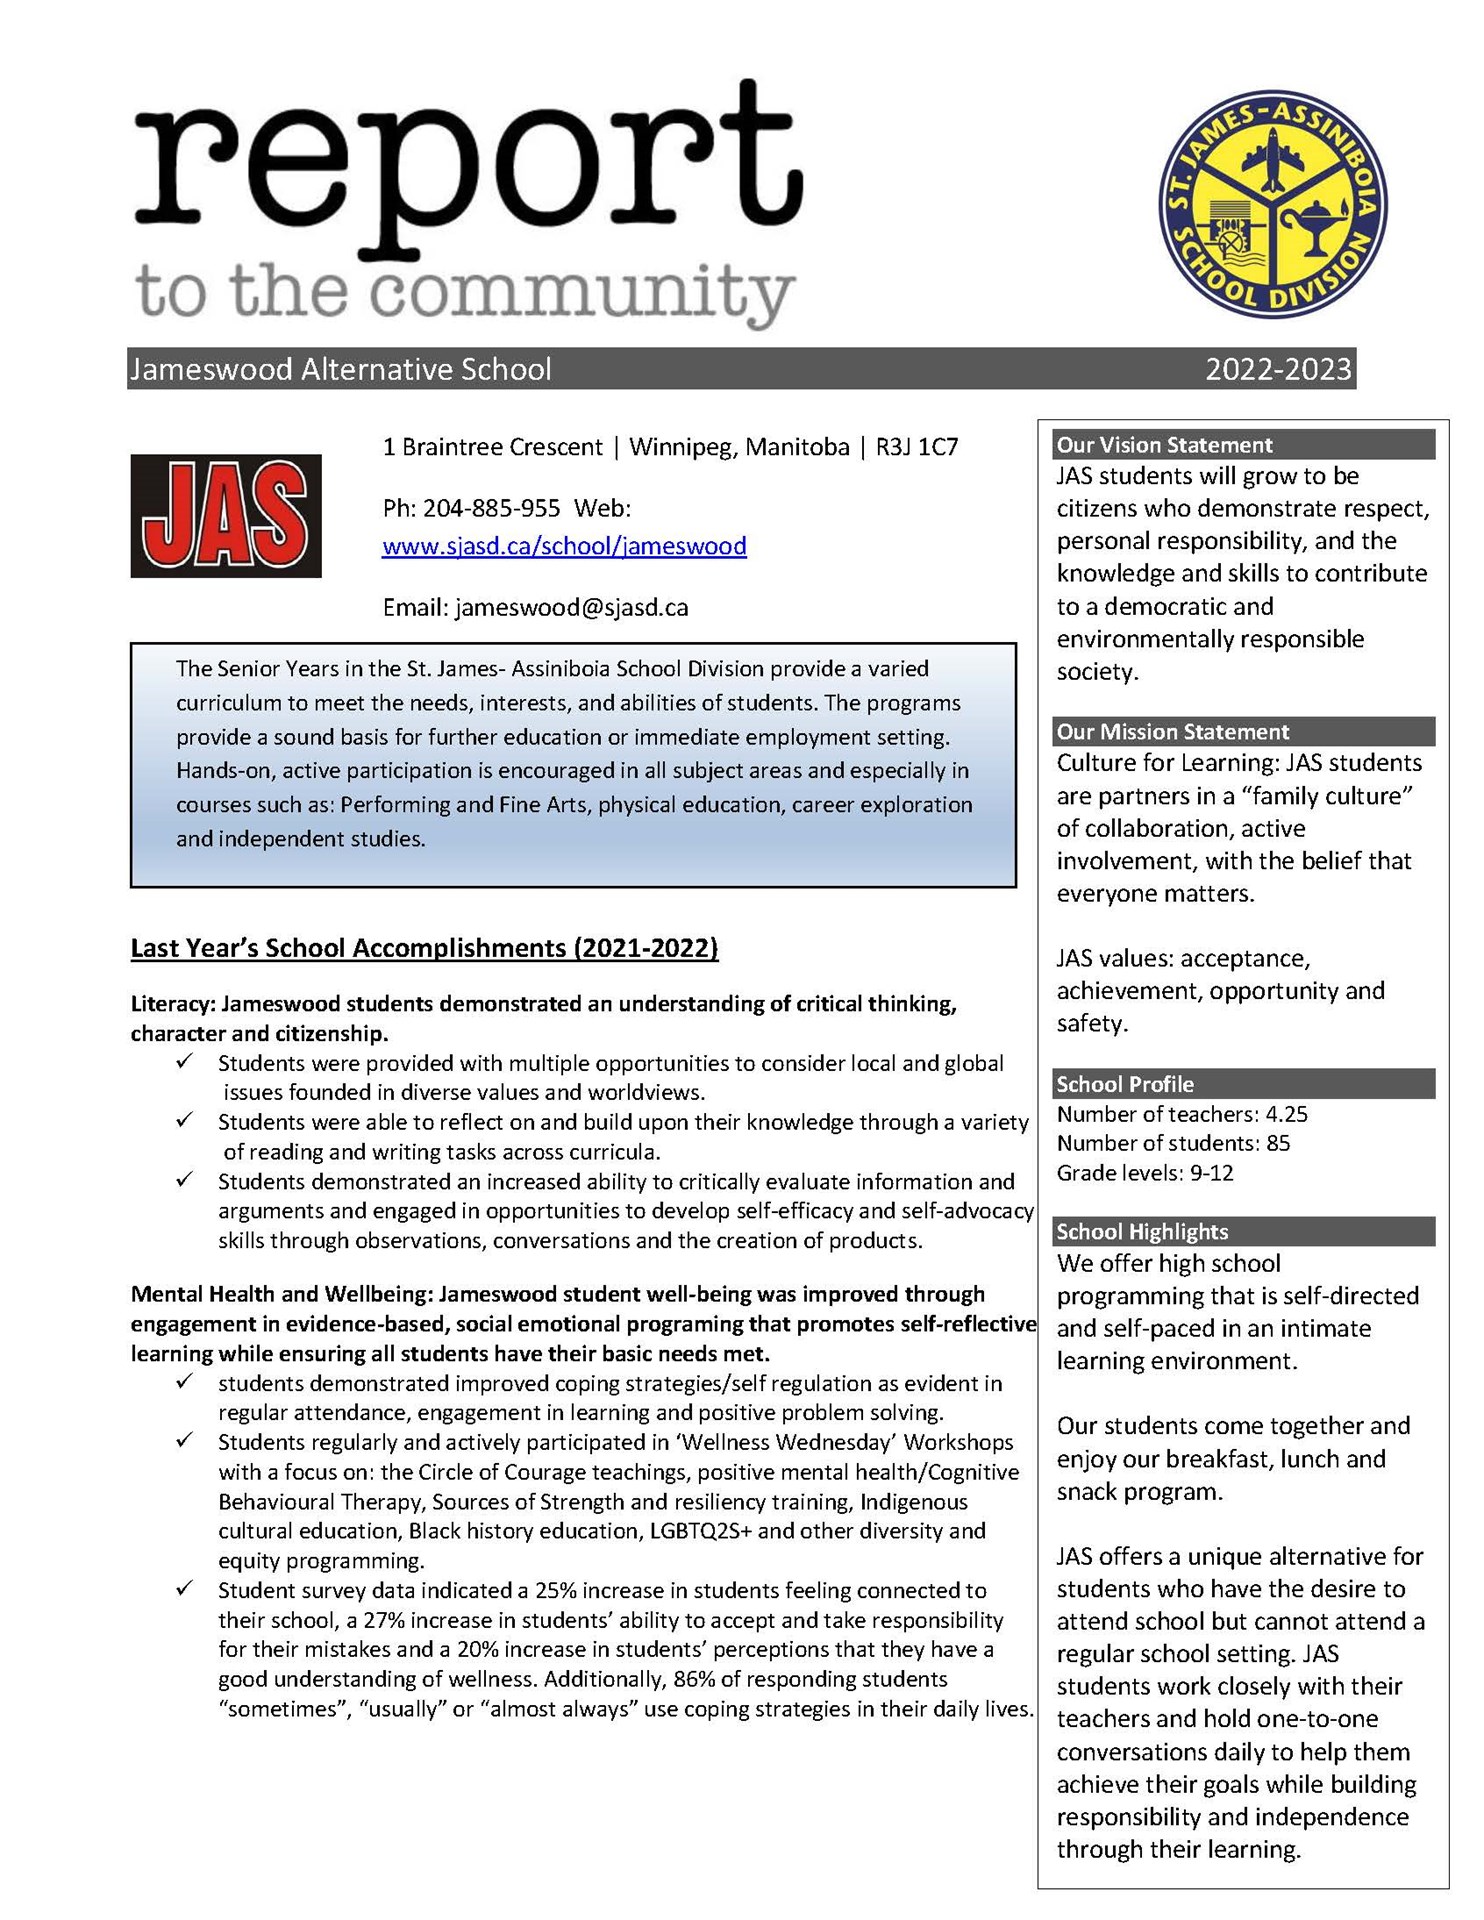 Report to Community - Jameswood Alternative School - 2022-2023_Page_1.jpg